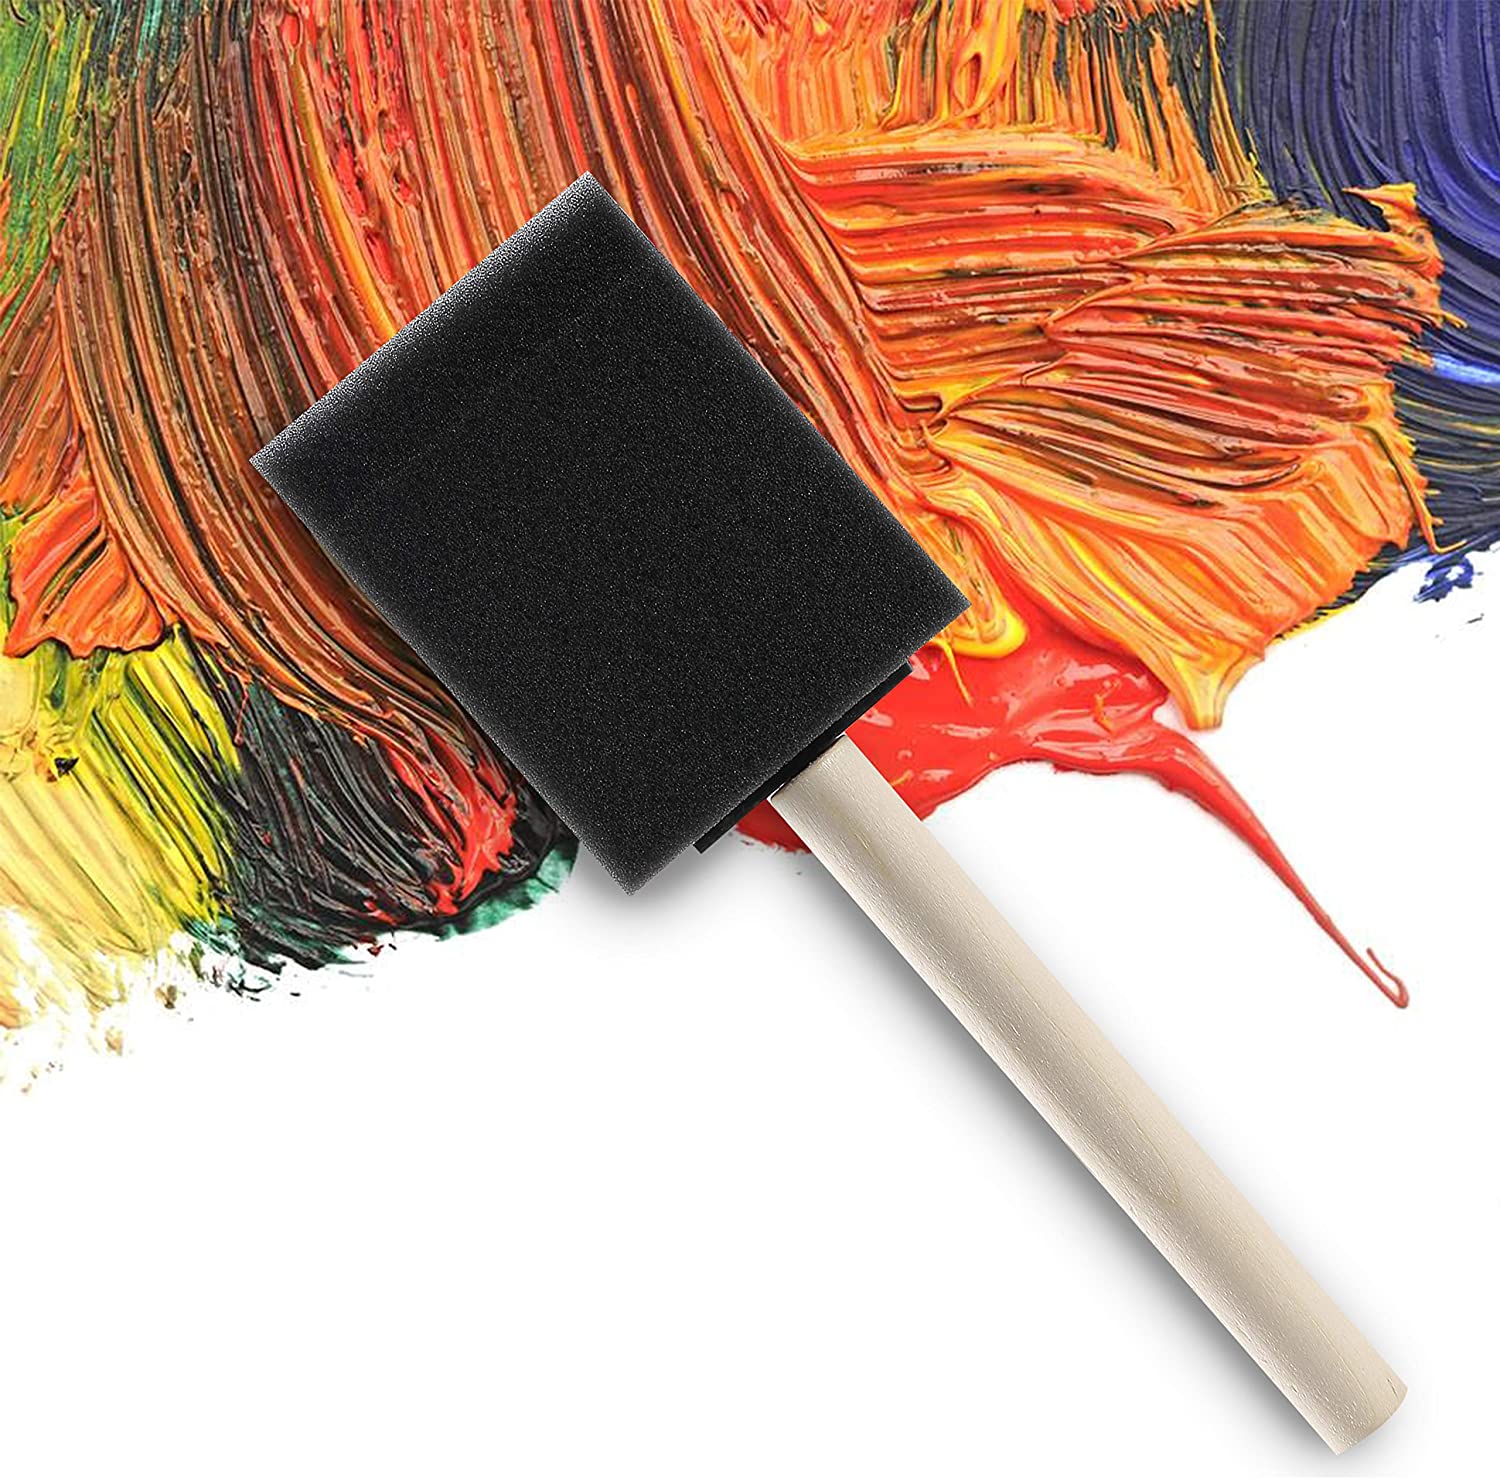 Bates- Foam Paint Brushes, 16pcs, 2 Inch, Sponge Brushes, Sponge